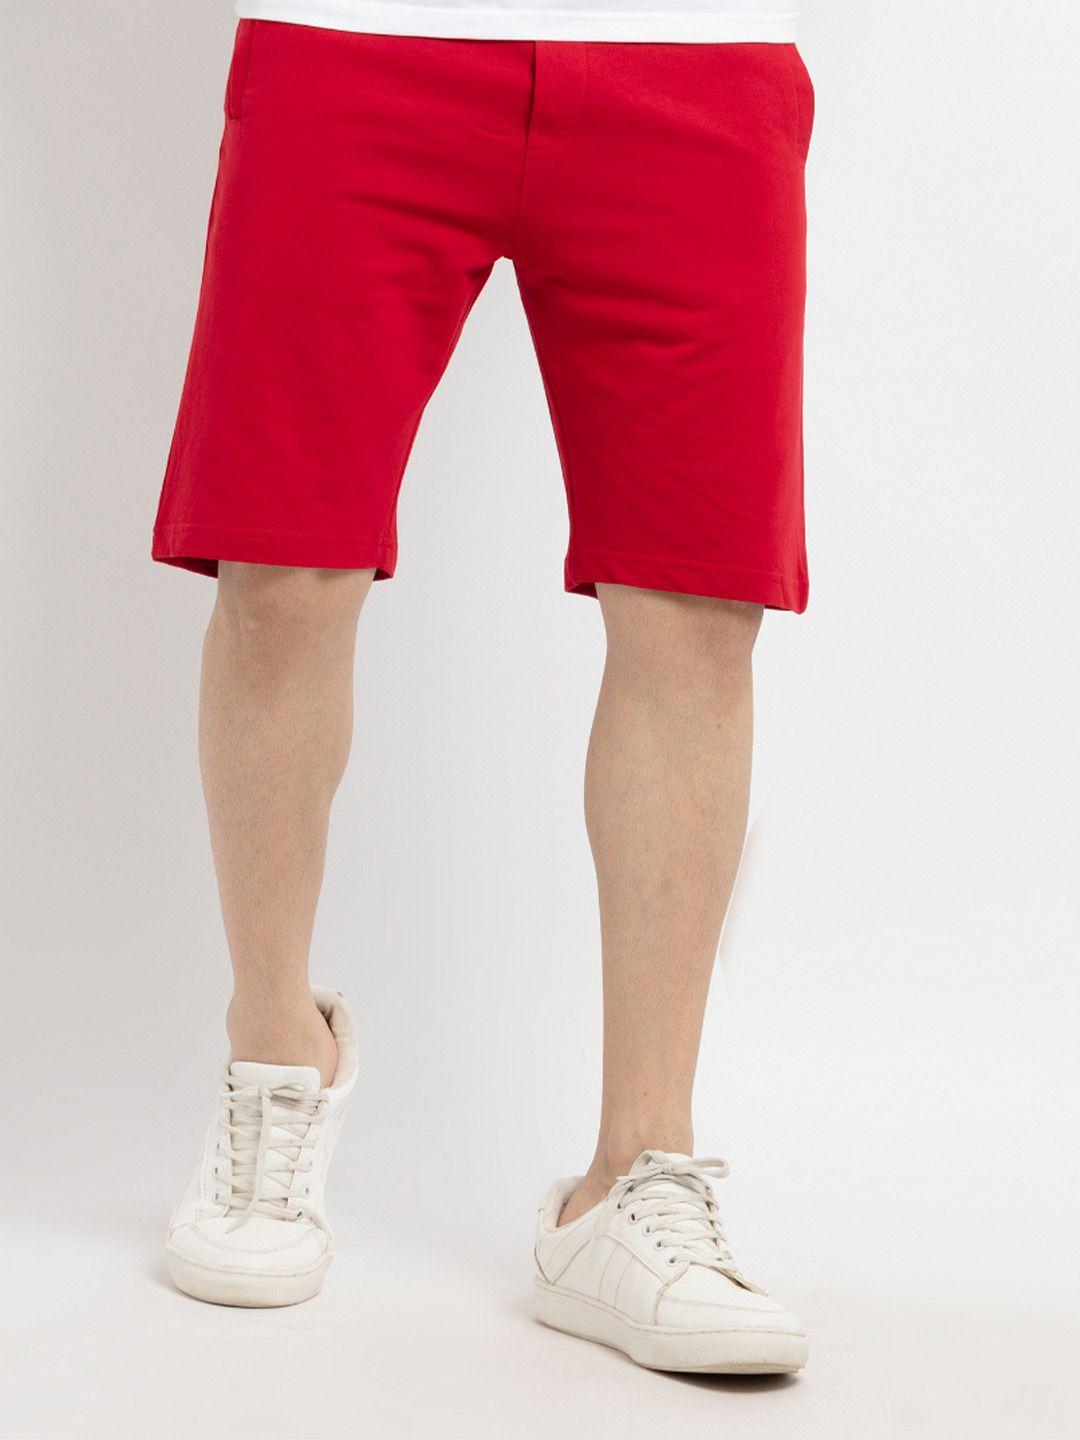 status quo men red regular shorts